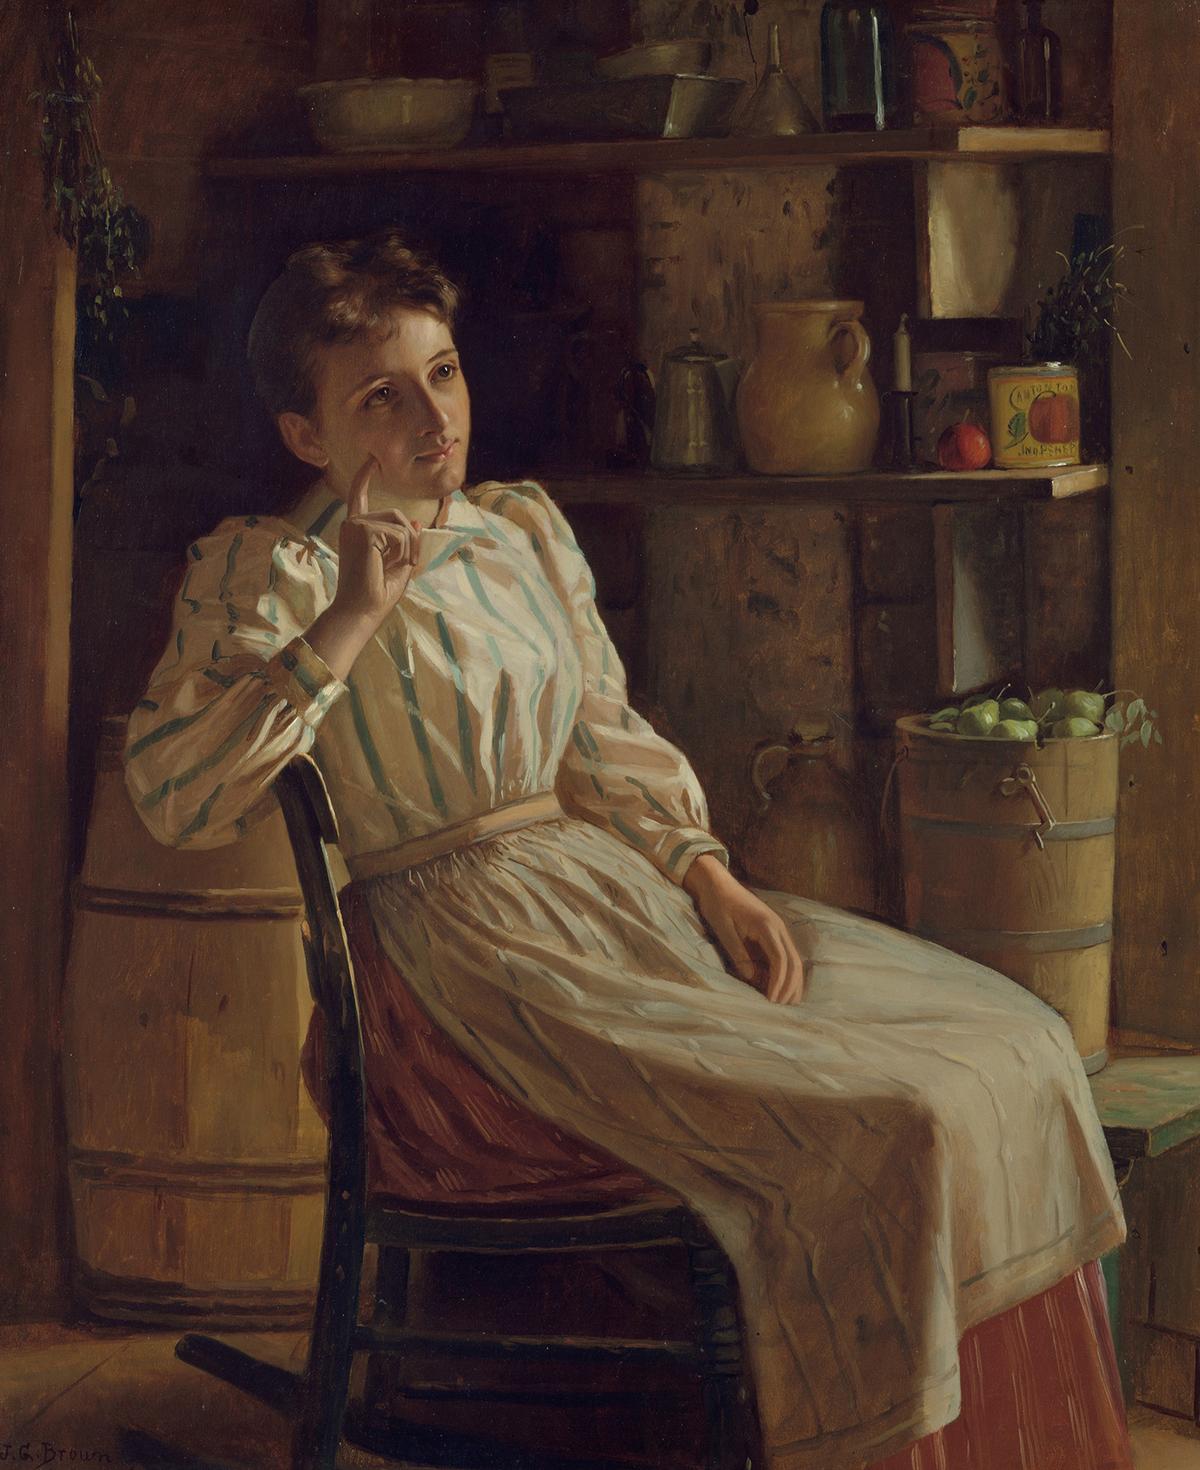 "Meditation," circa 1900–1910, by John George Brown. Oil on canvas. The Metropolitan Museum of Art, New York City. (Public Domain)